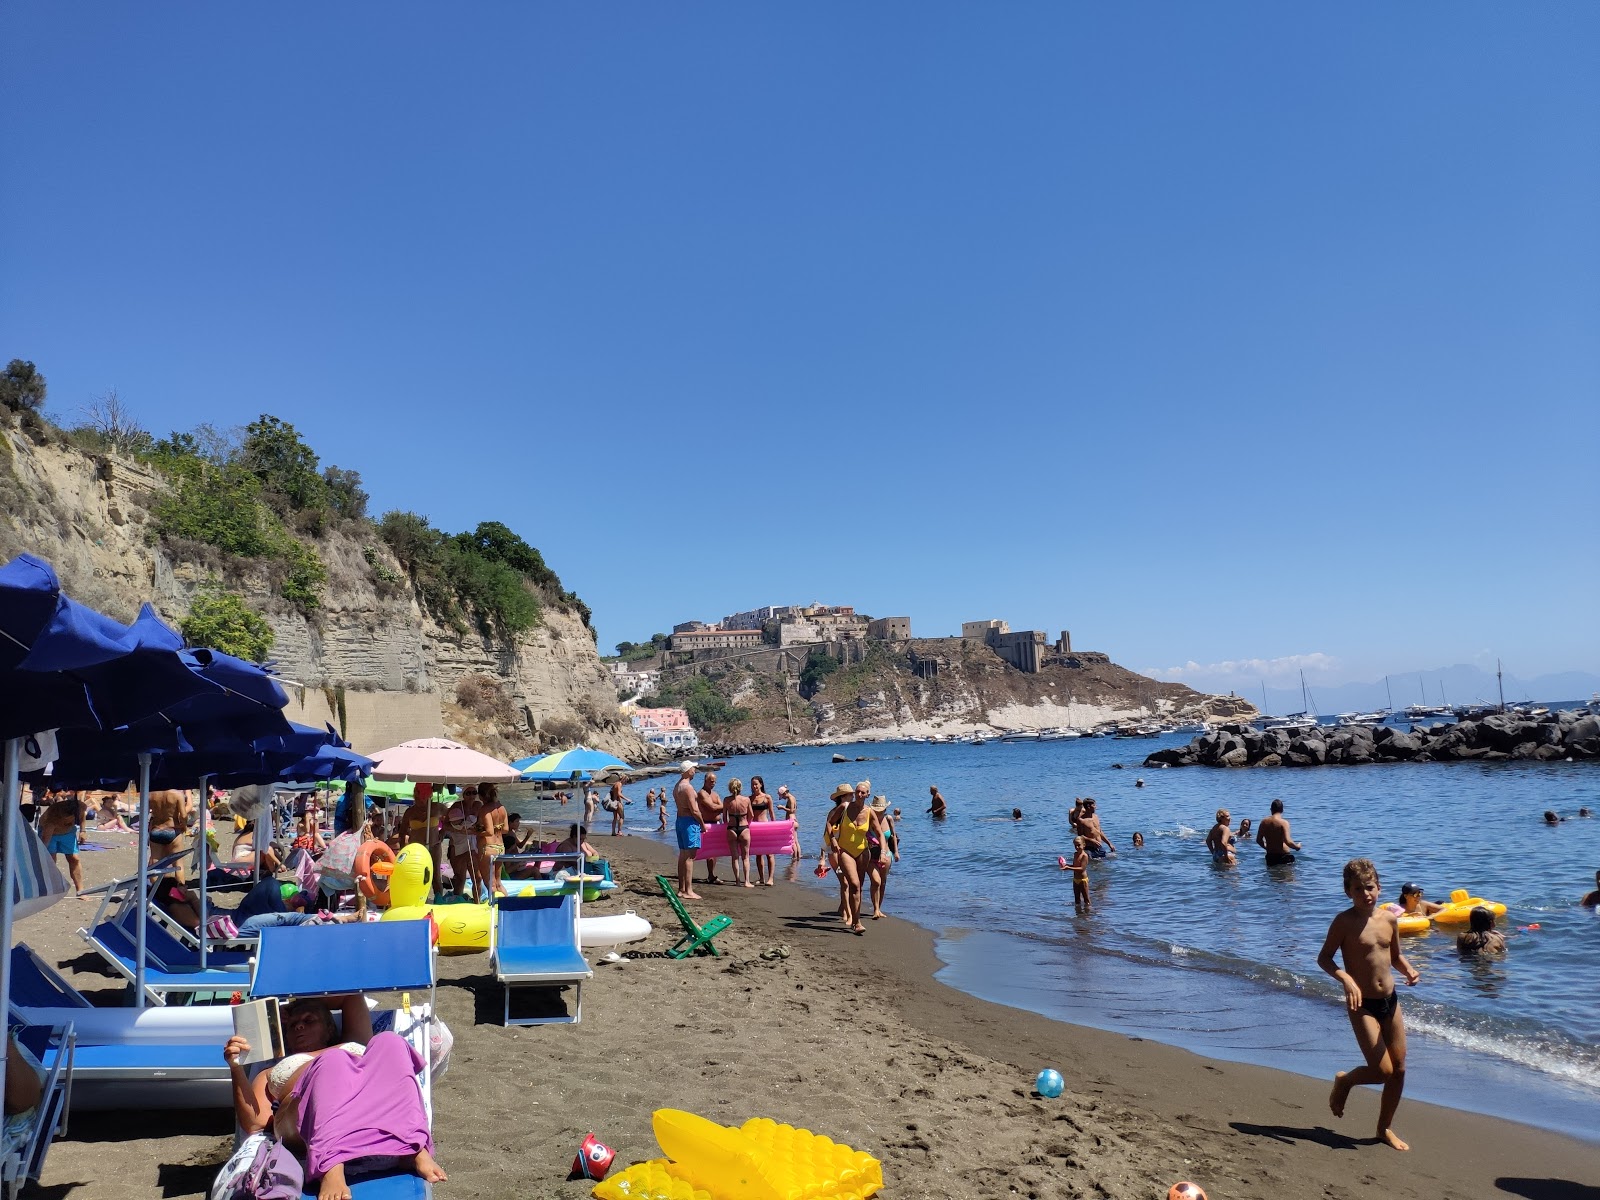 Foto de Spiaggia Chiaia con playa amplia